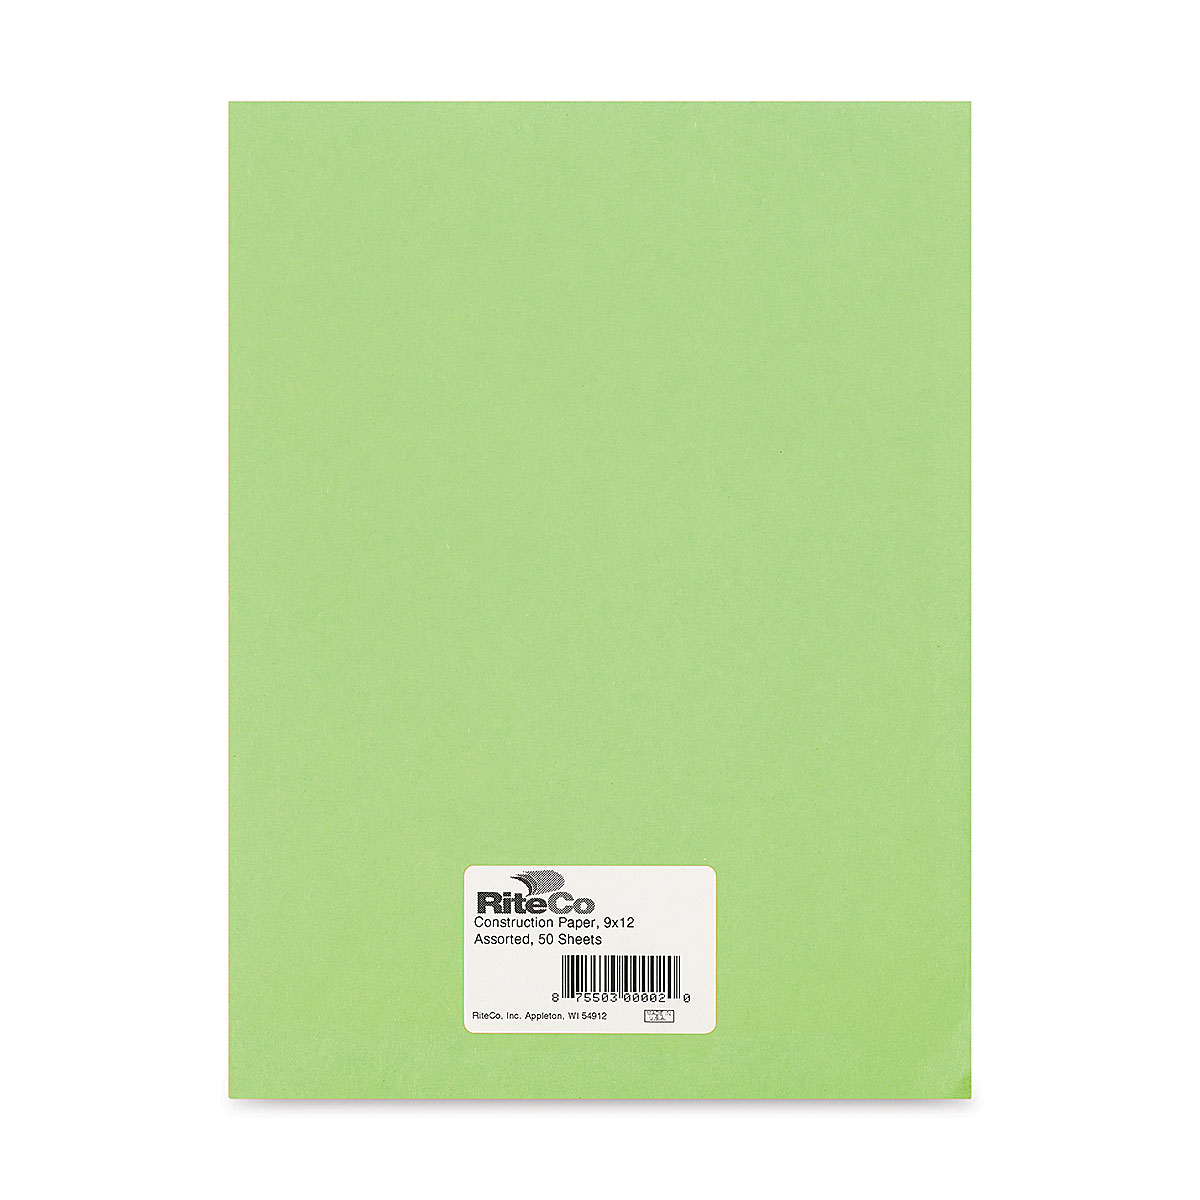 Riteco Construction Paper - Light Green, 9 x 12, 50 Sheets